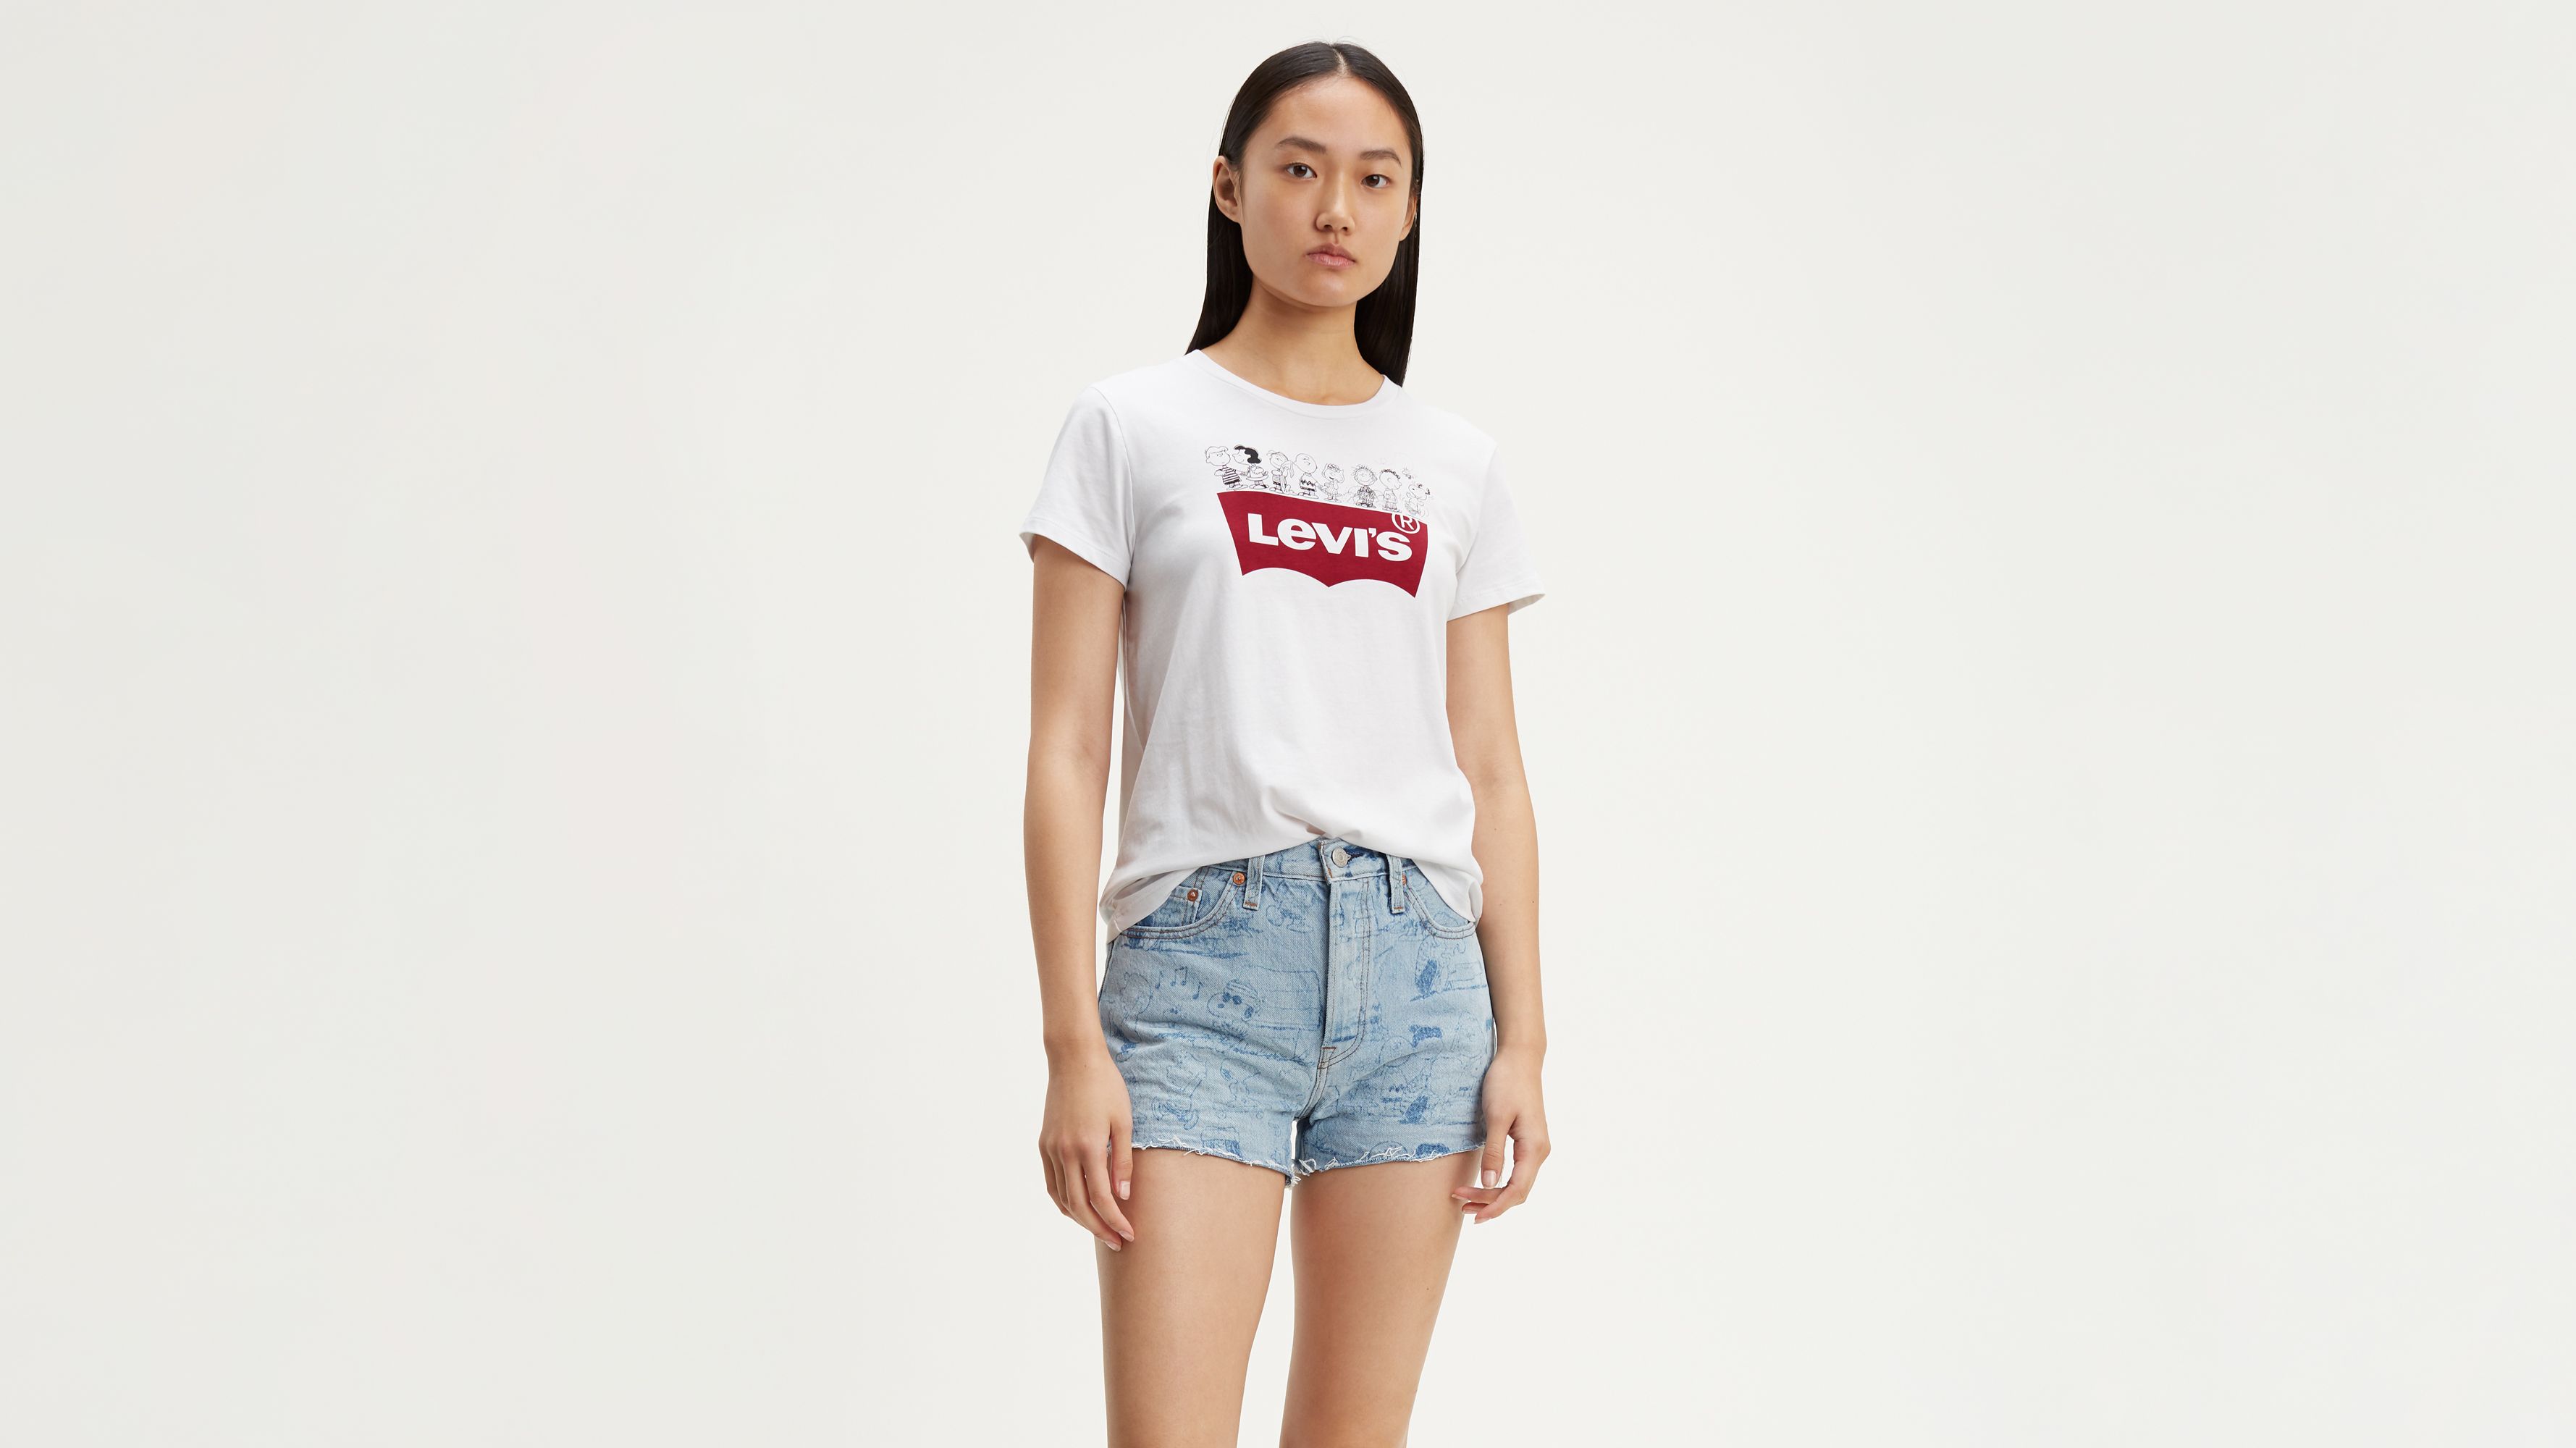 levi's snoopy t shirt womens